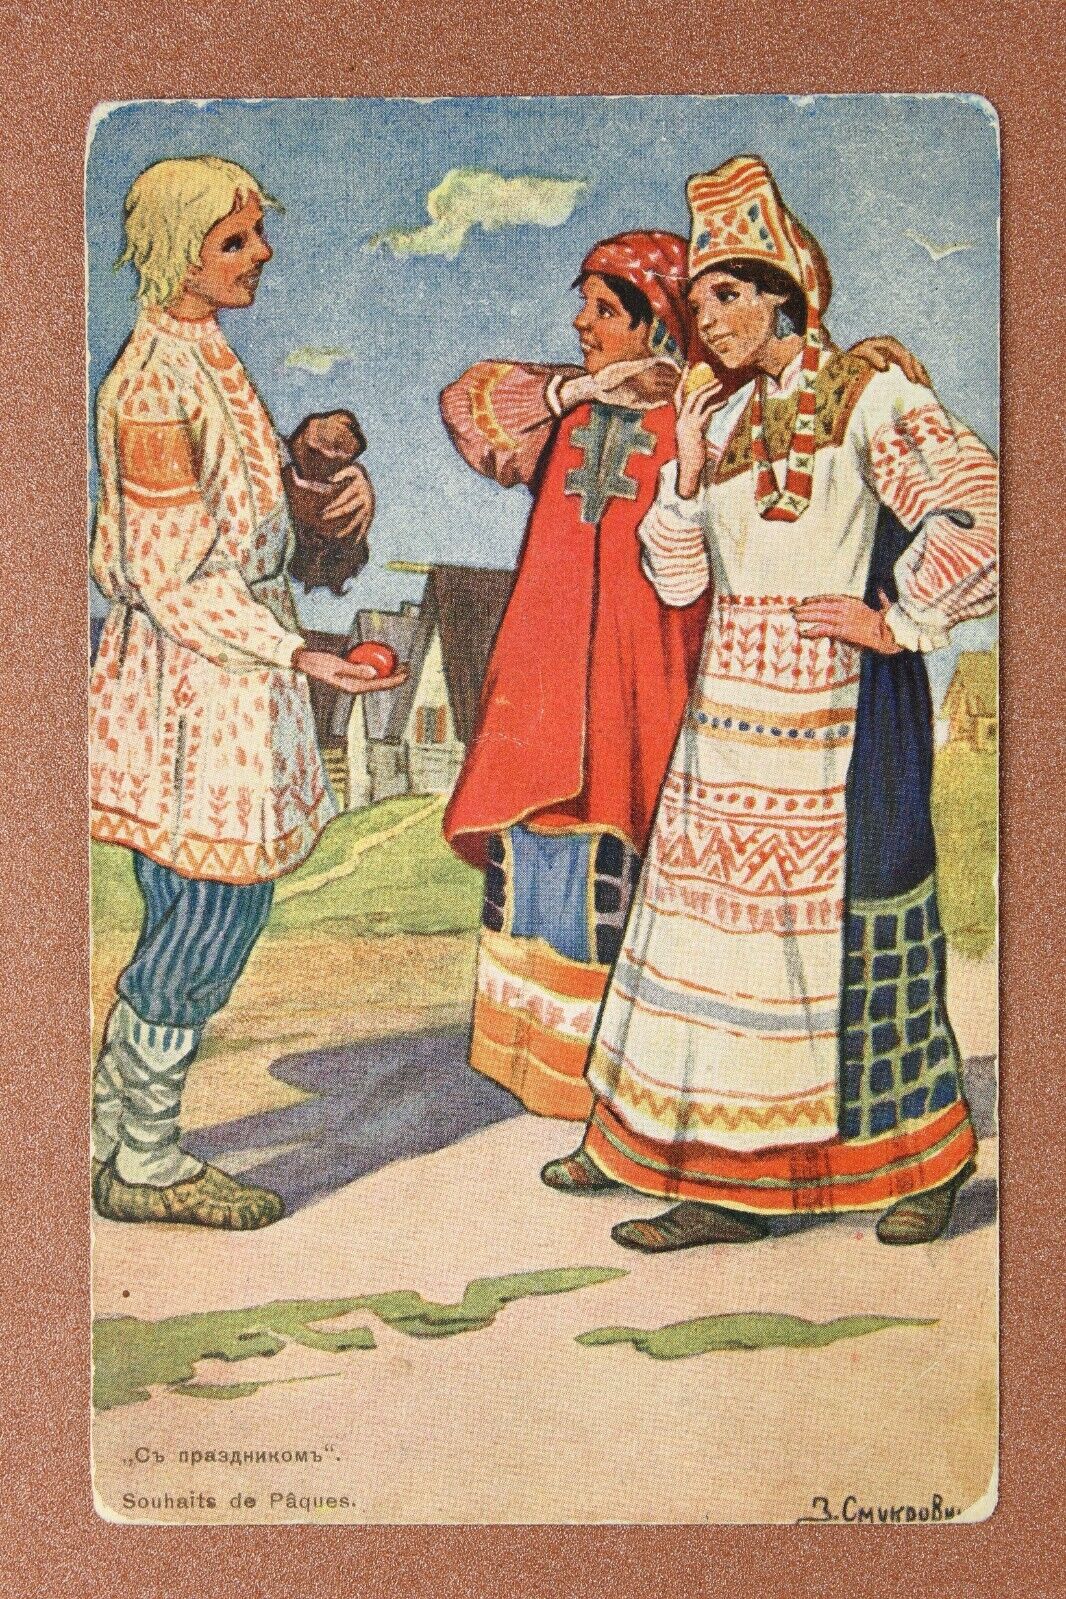 SMUKROVICH. Rural Guy gift Red EGG Girls. Tsarist Russia EASTER postcard 1909s🐇